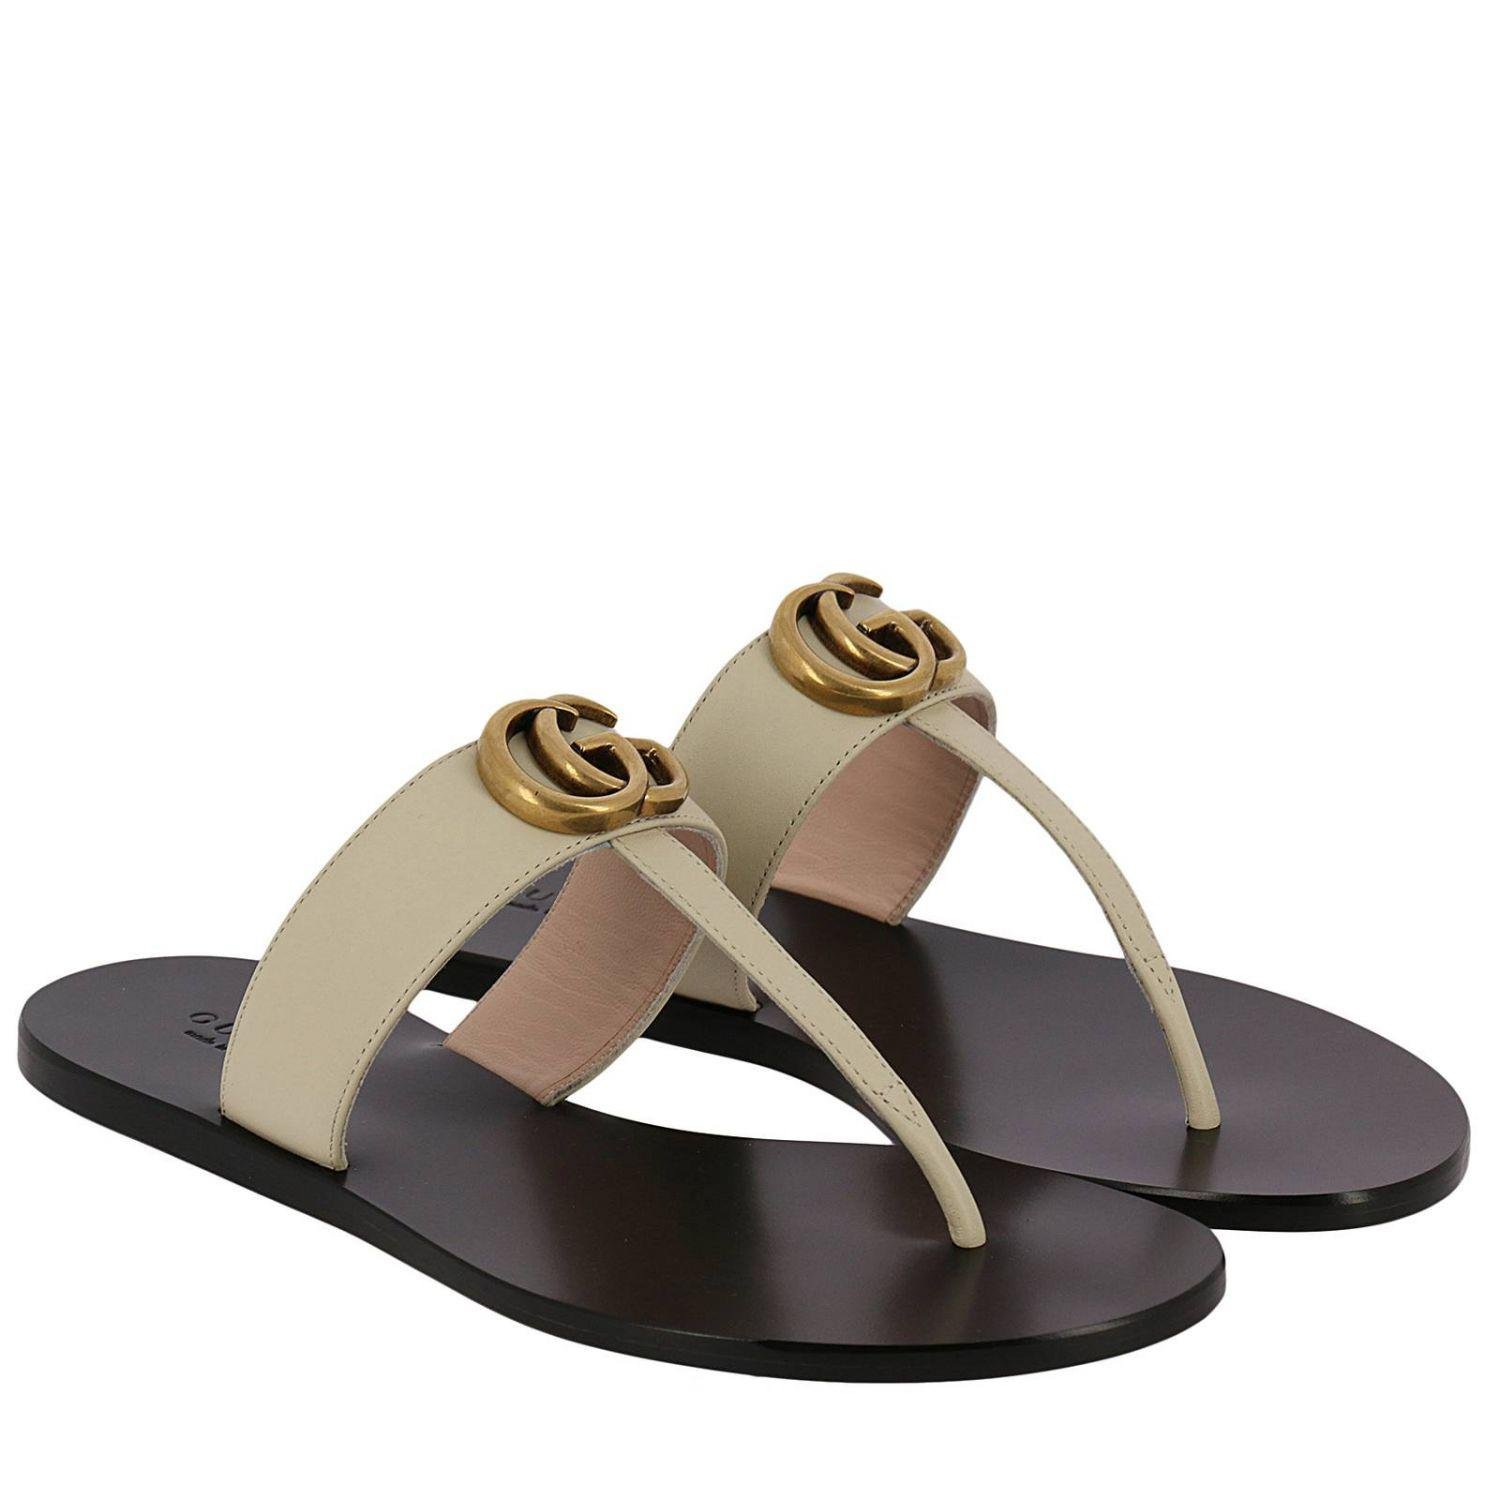 Gucci Flat Sandals Shoes Women - Lyst